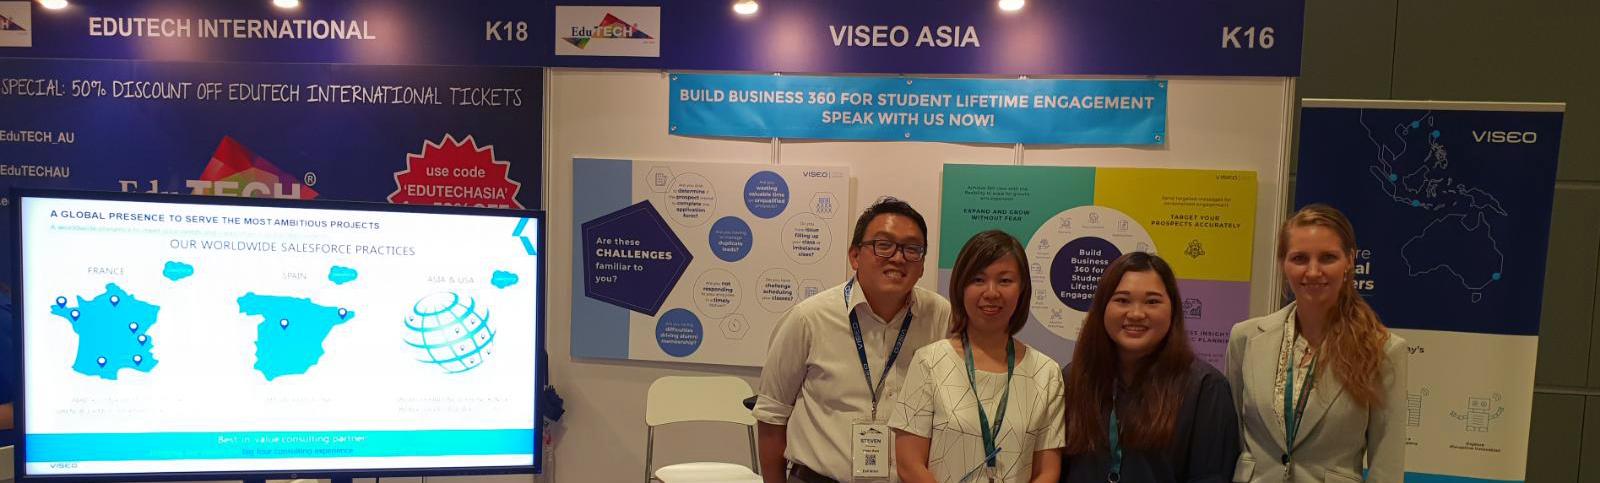 VISEO Asia at EduTech Asia 2018 